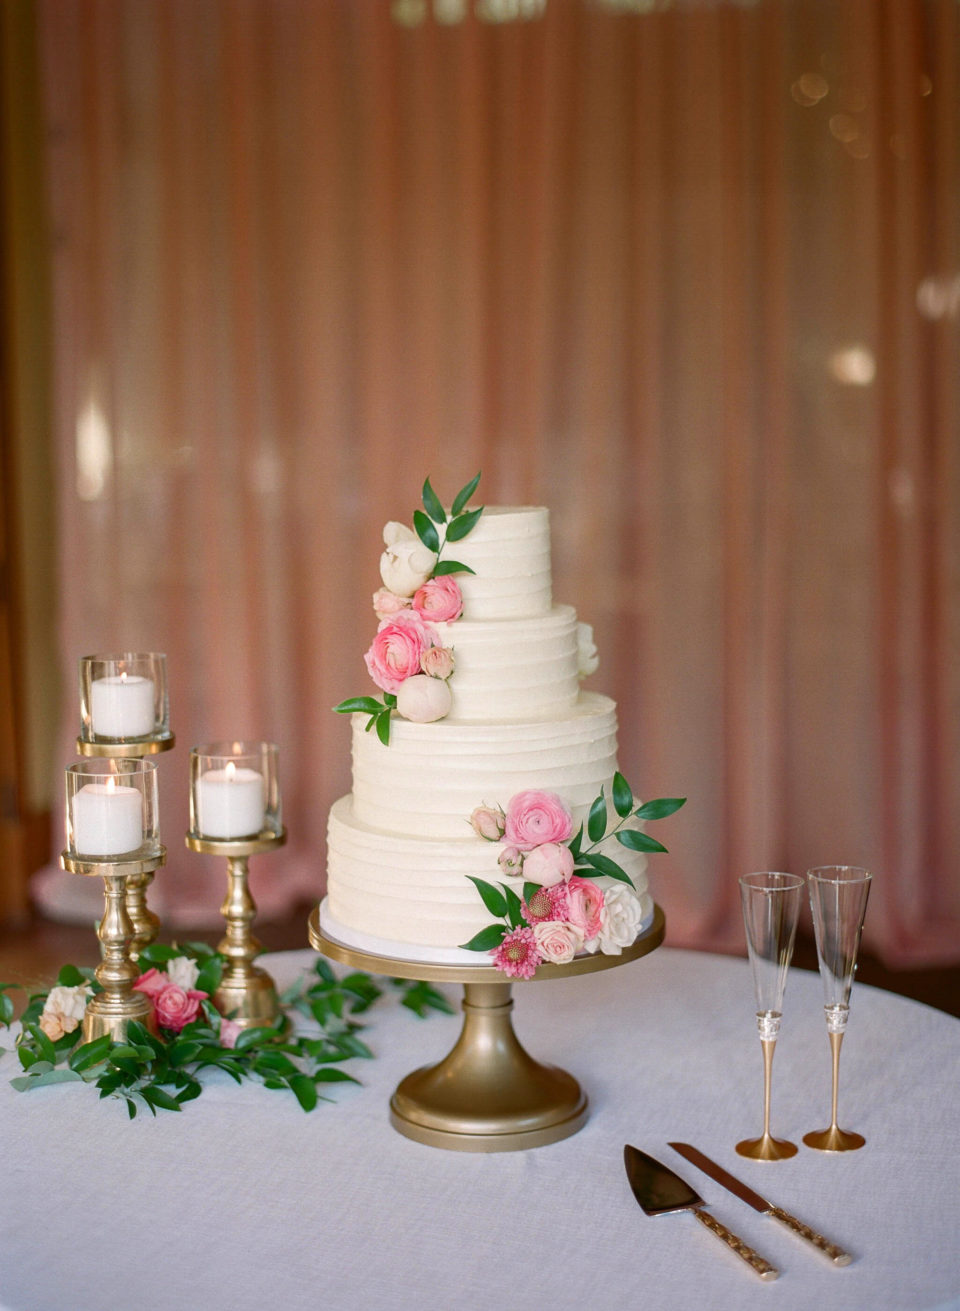 Pink and White Buttercream Wedding Cake